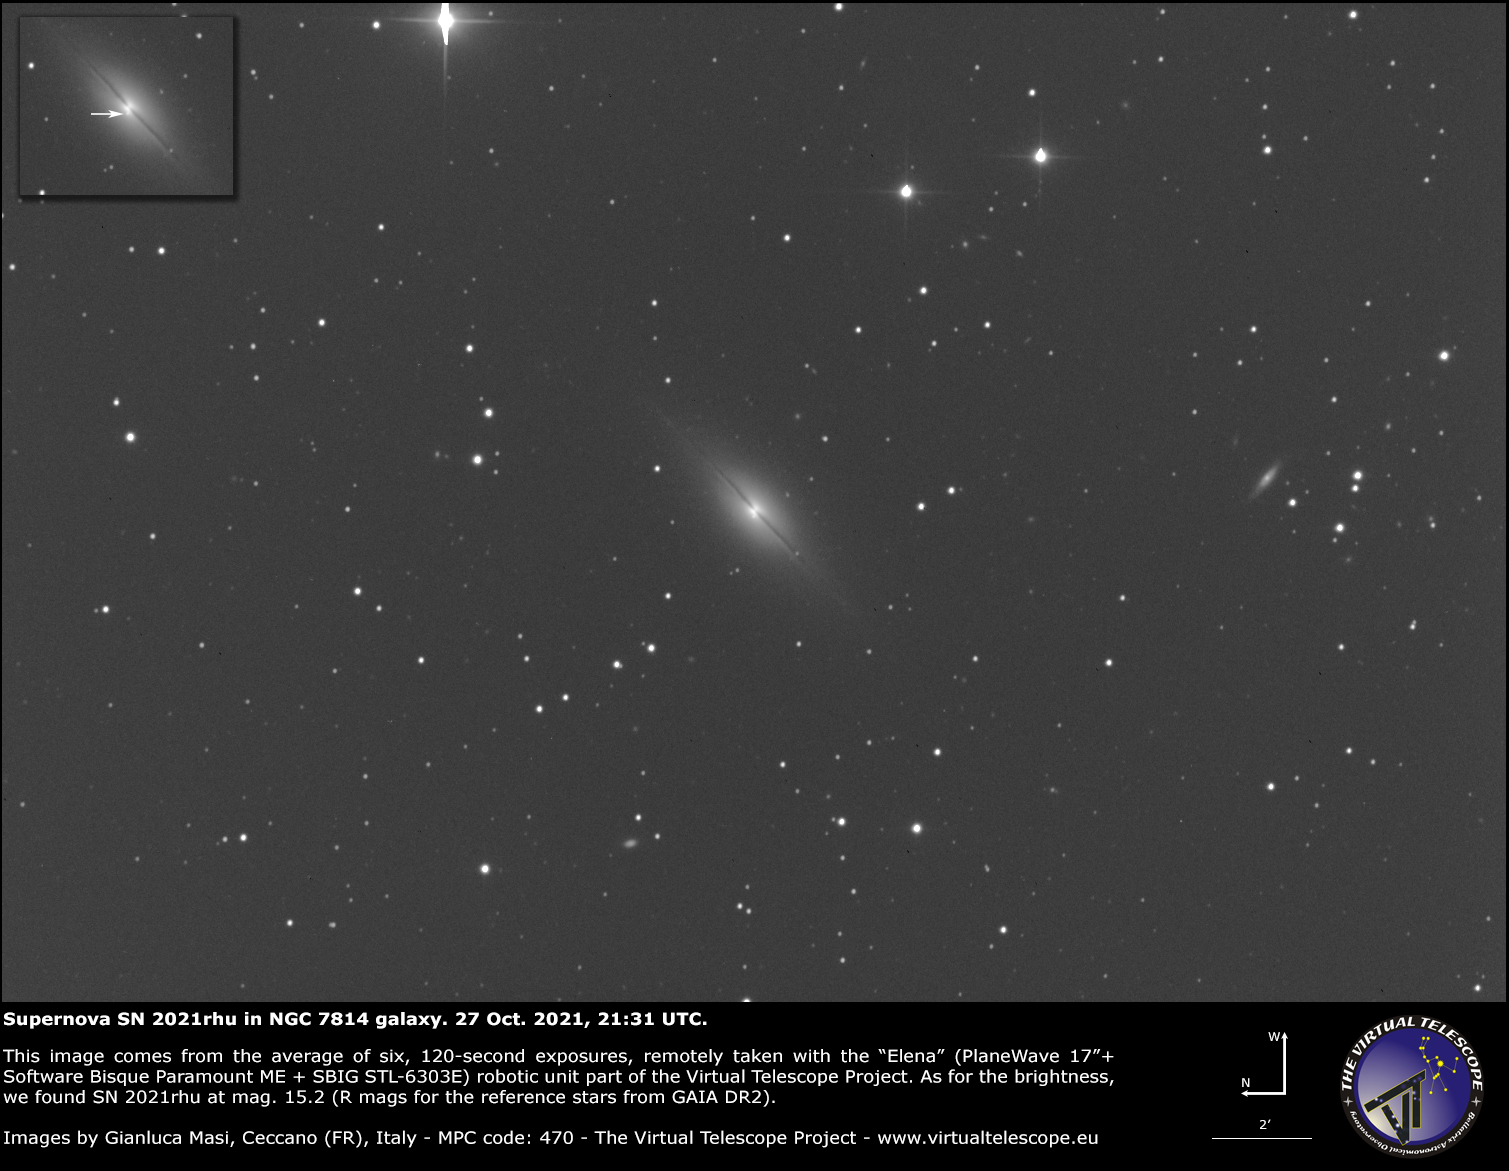 Supernova SN 2021rhu in NGC 7814 galaxy: 27 Oct. 2021.